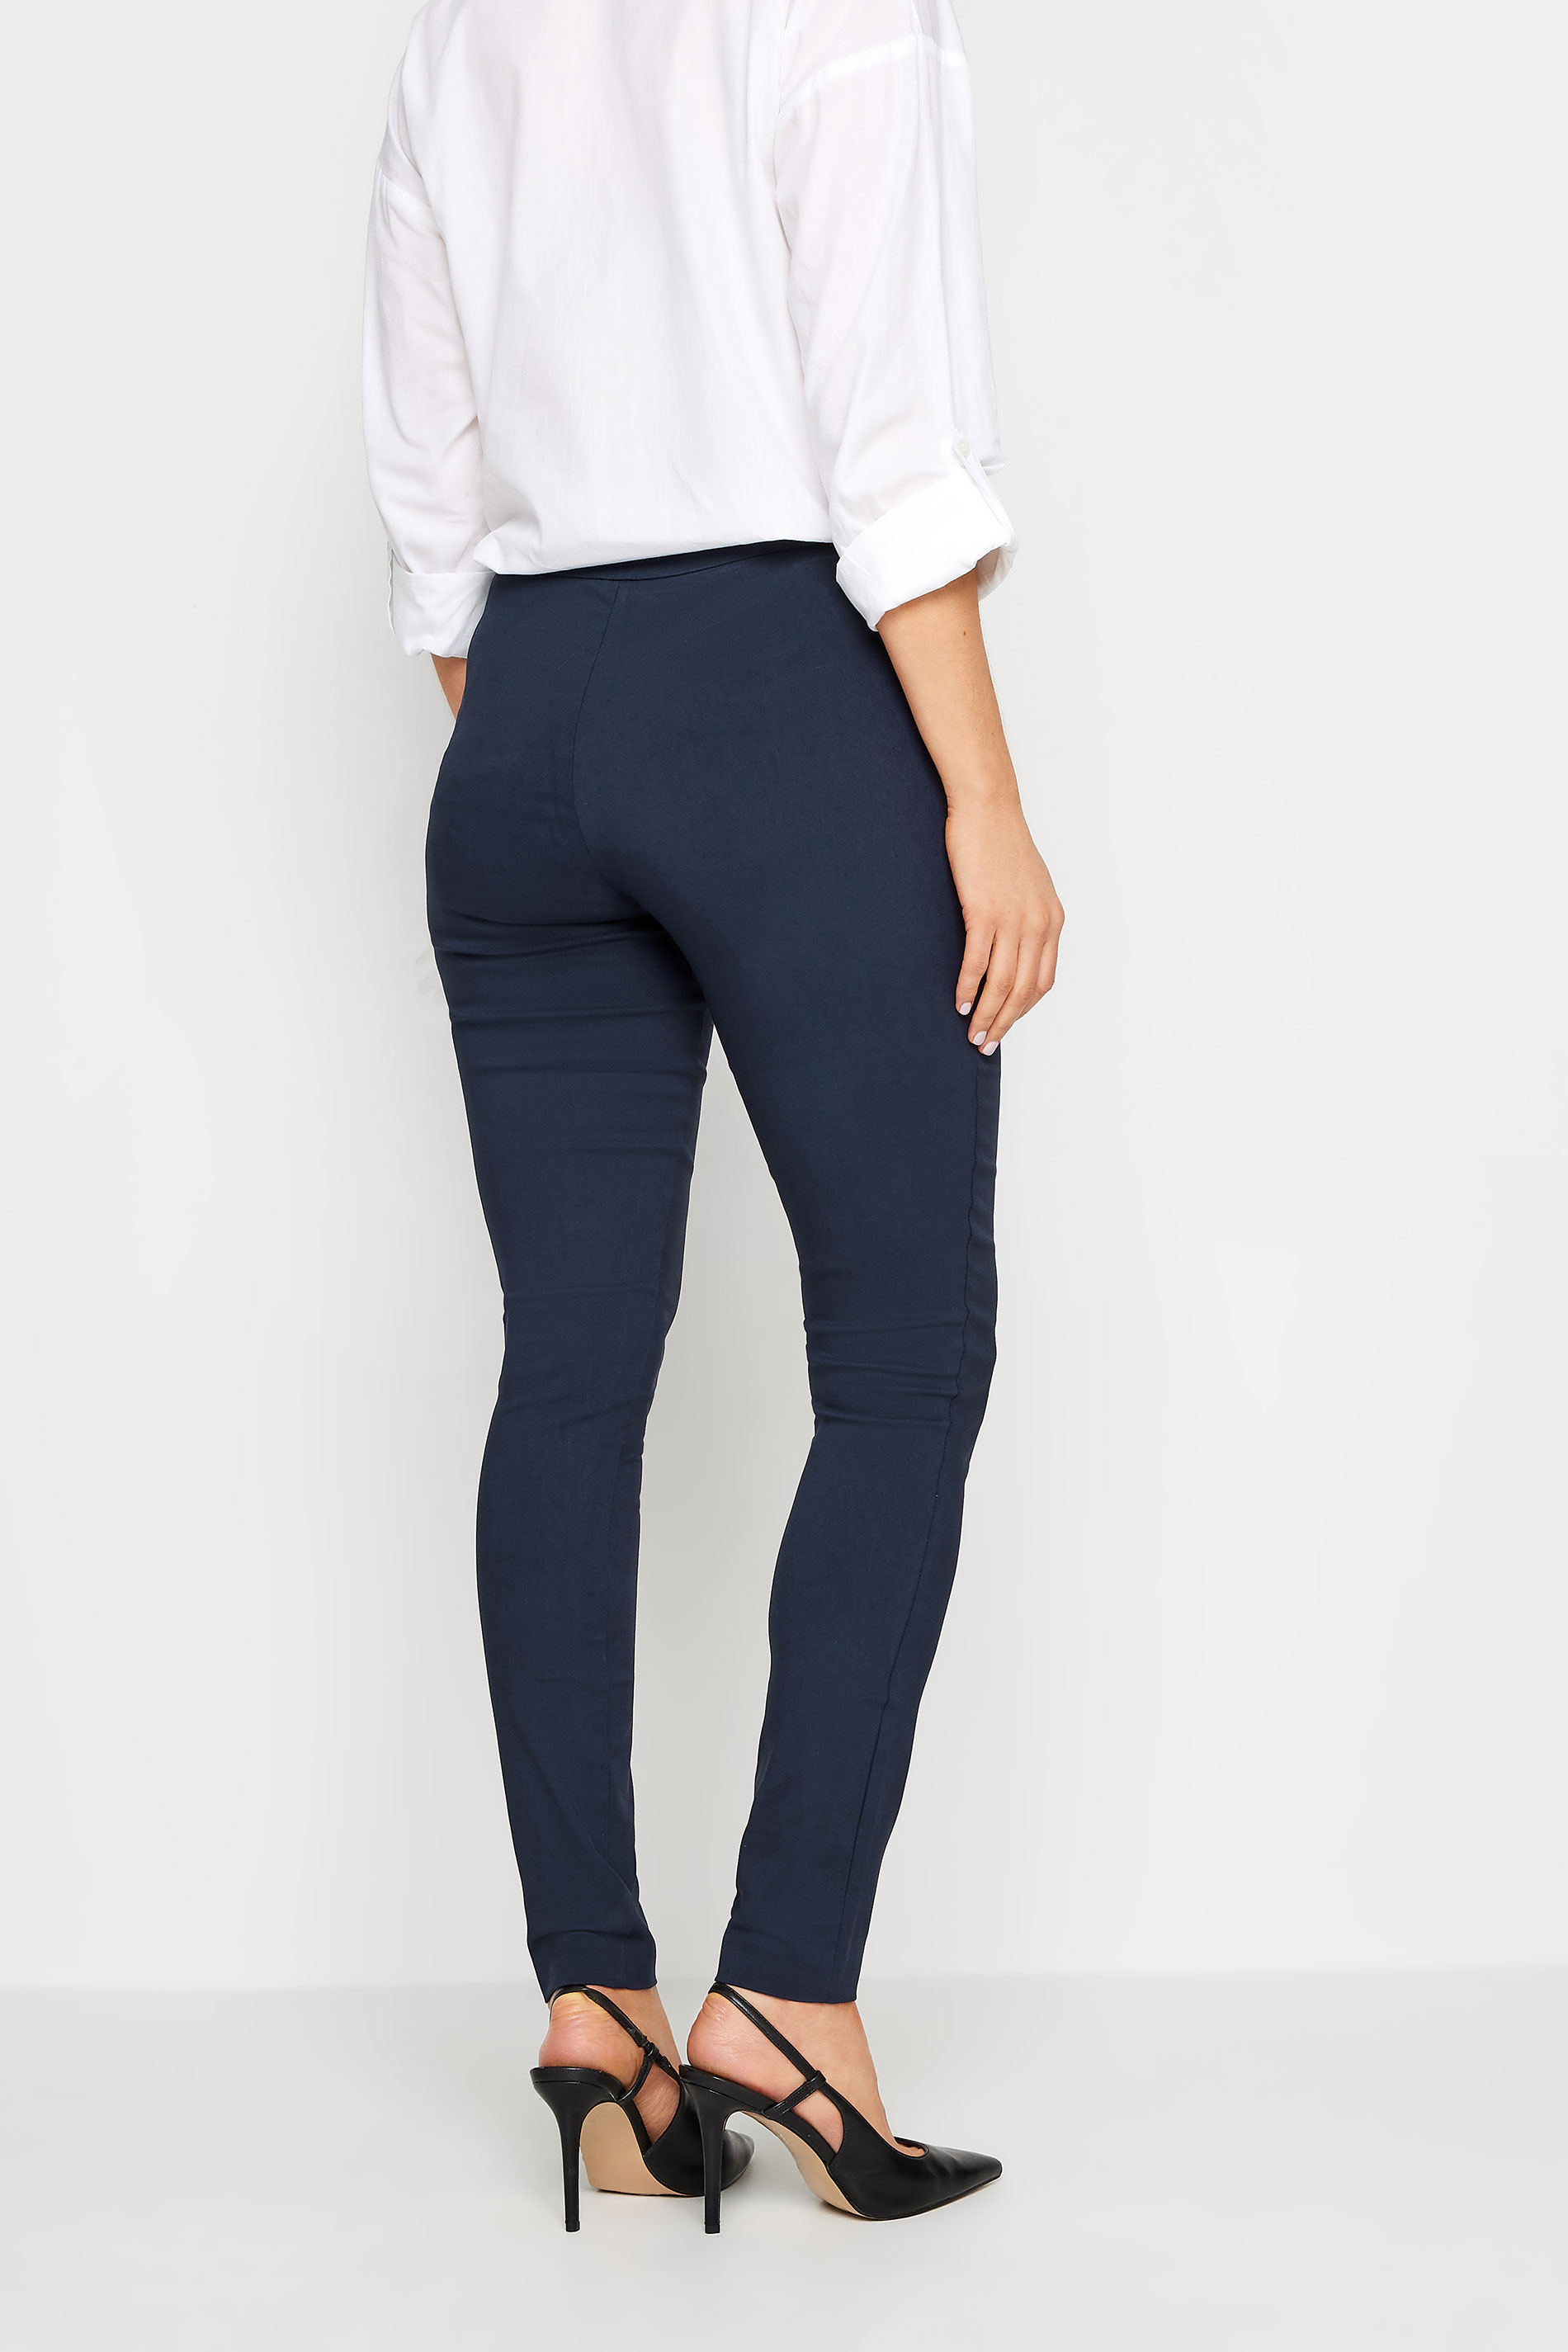 LTS Tall Women's Navy Blue Stretch Skinny Leg Trousers